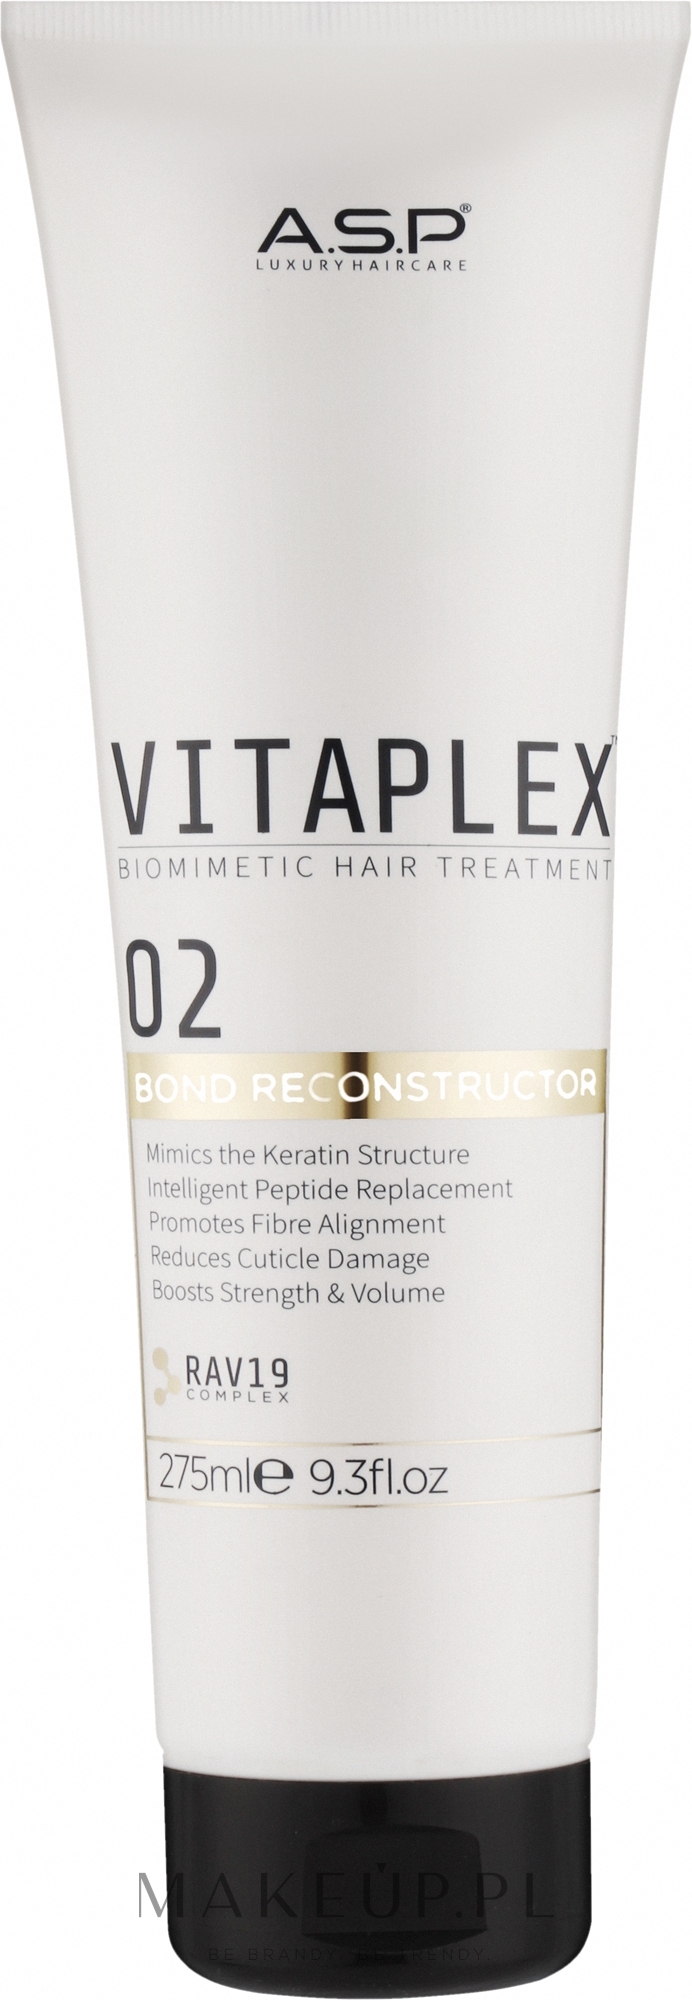 Koncentrat do włosów - Affinage Salon Professional Vitaplex Biomimetic Hair Treatment Part 2 Reconstructor — Zdjęcie 275 ml